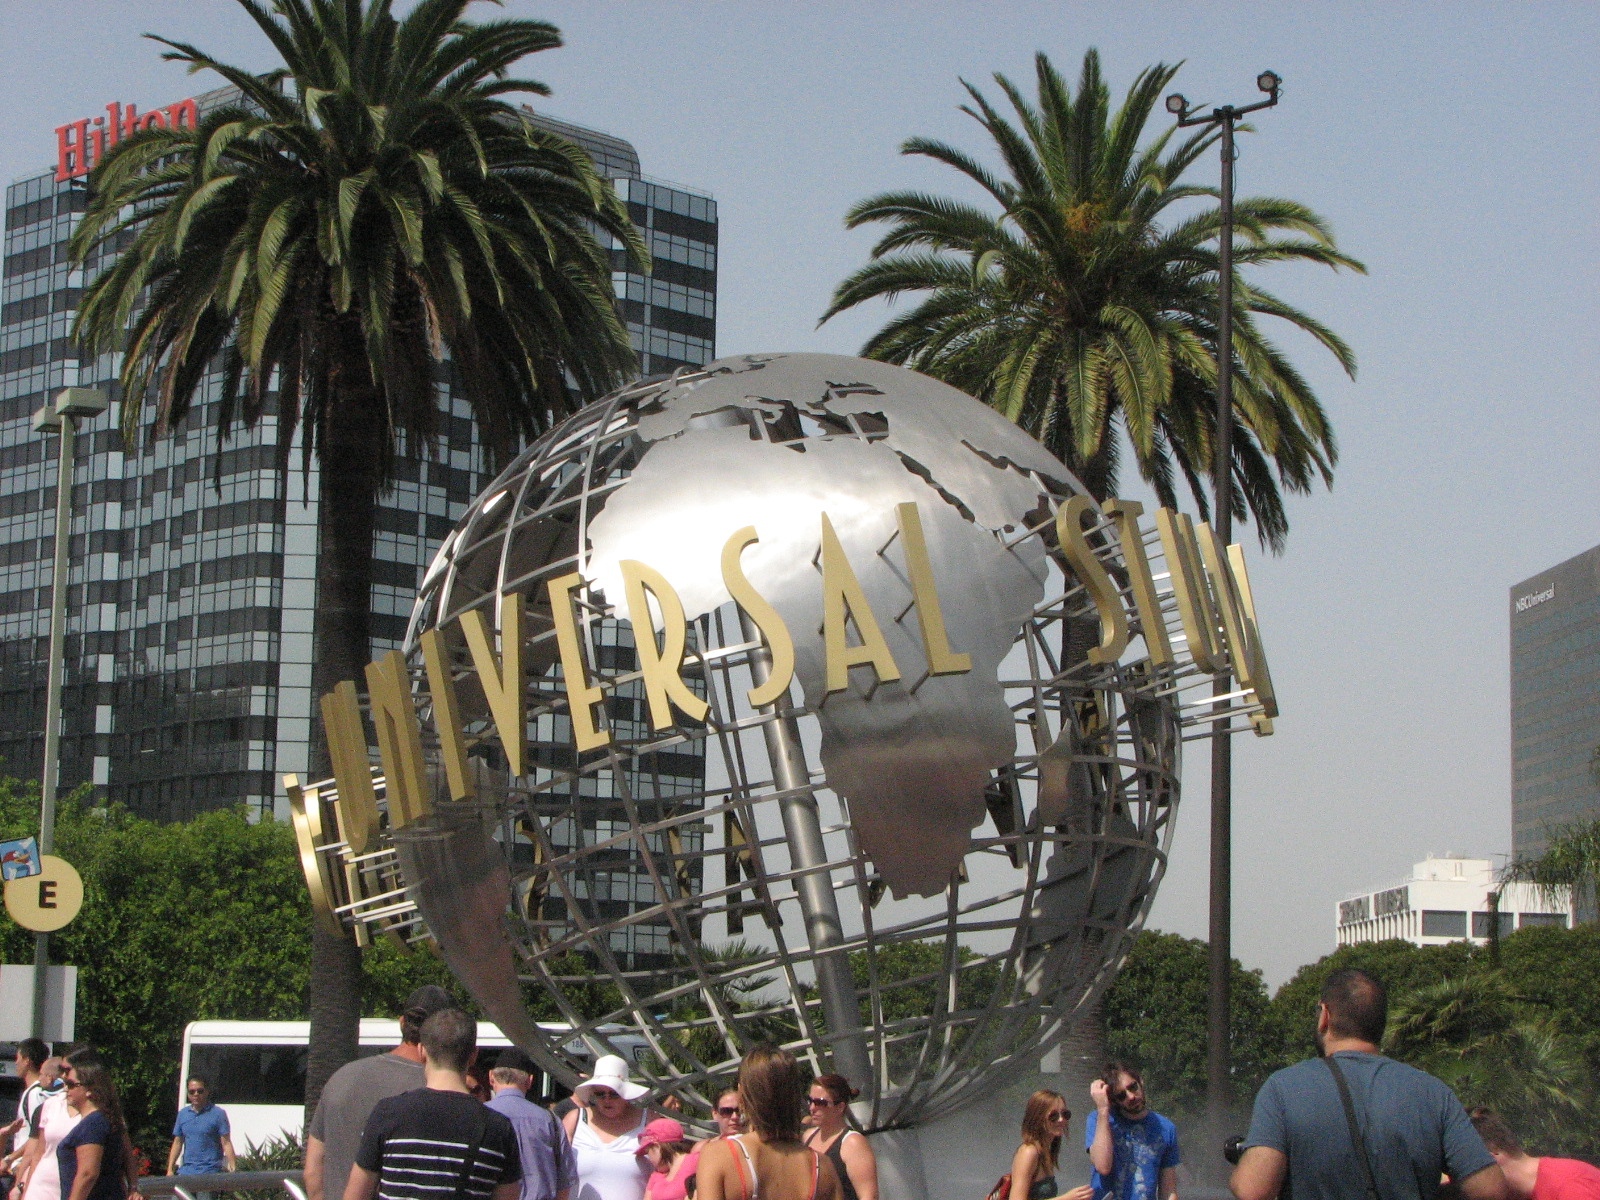 Universal studios globe